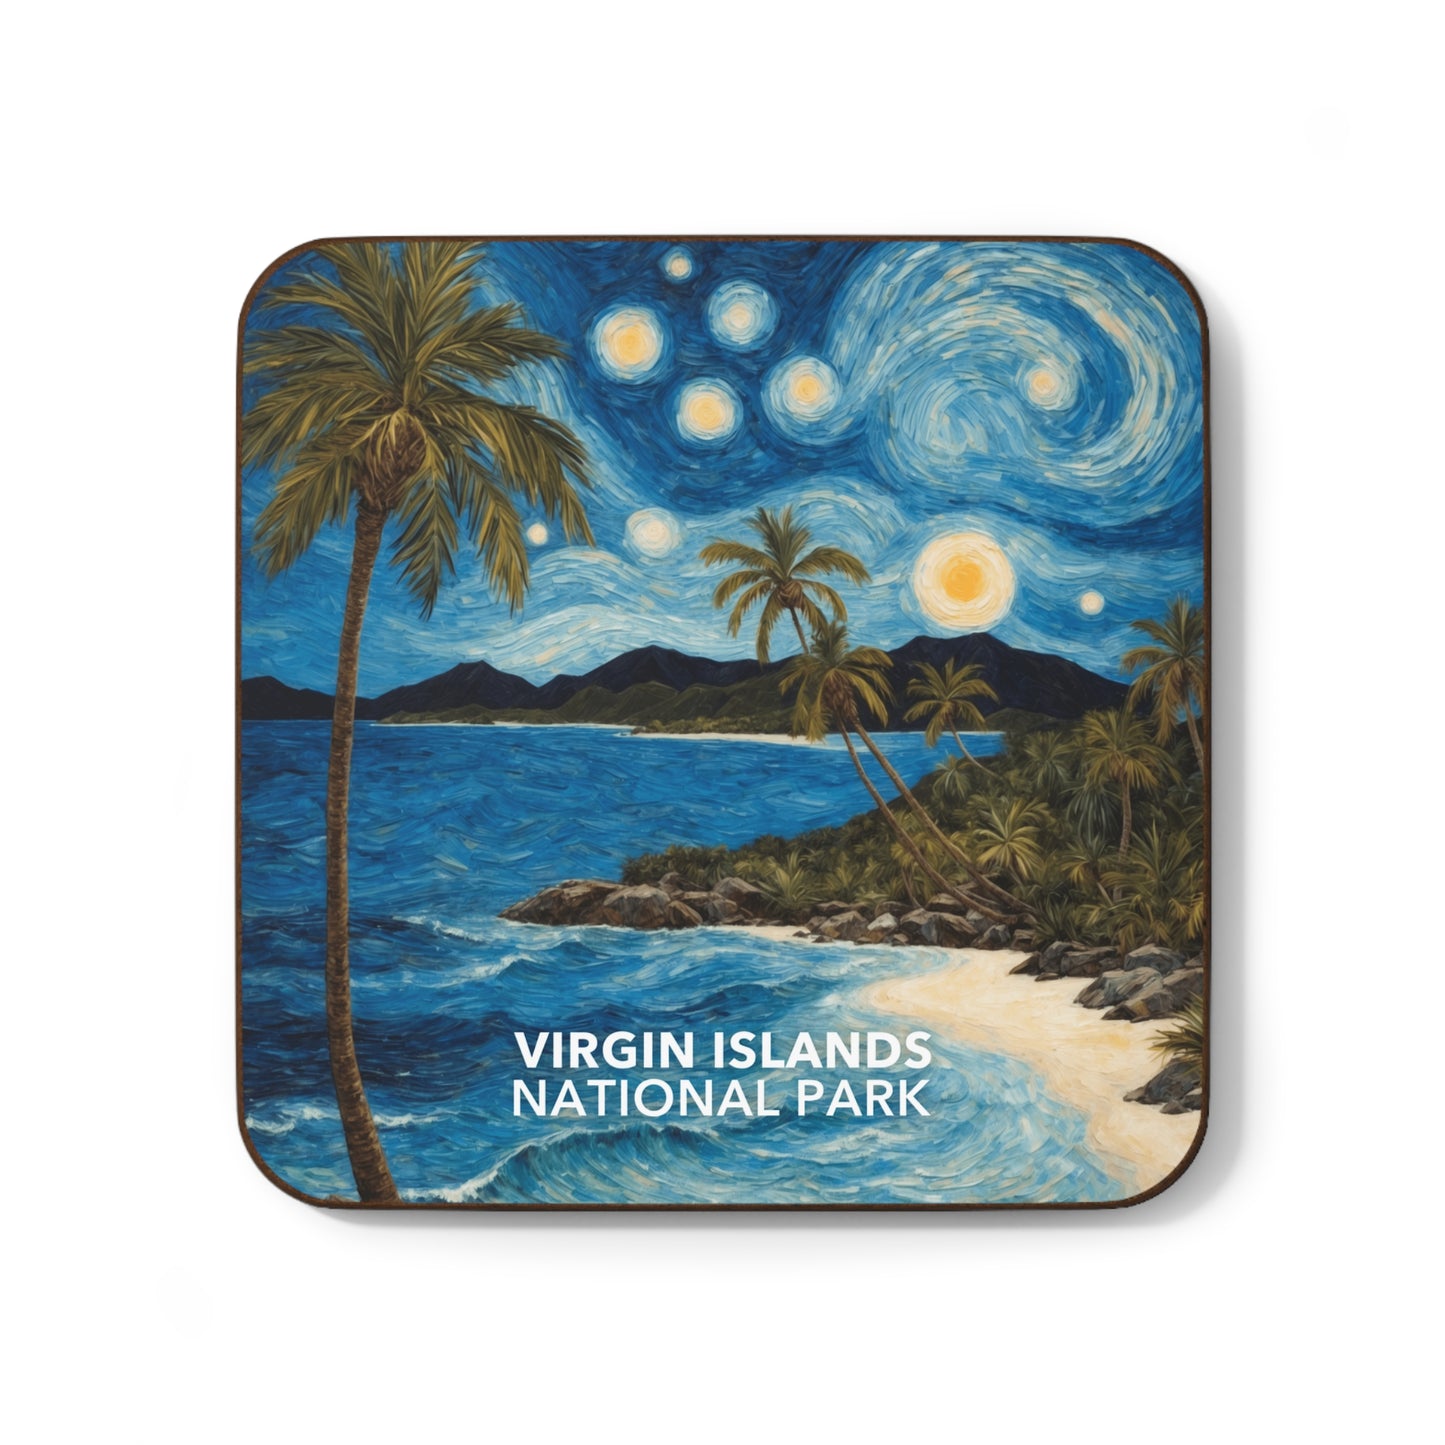 Virgin Islands National Park Coaster - The Starry Night